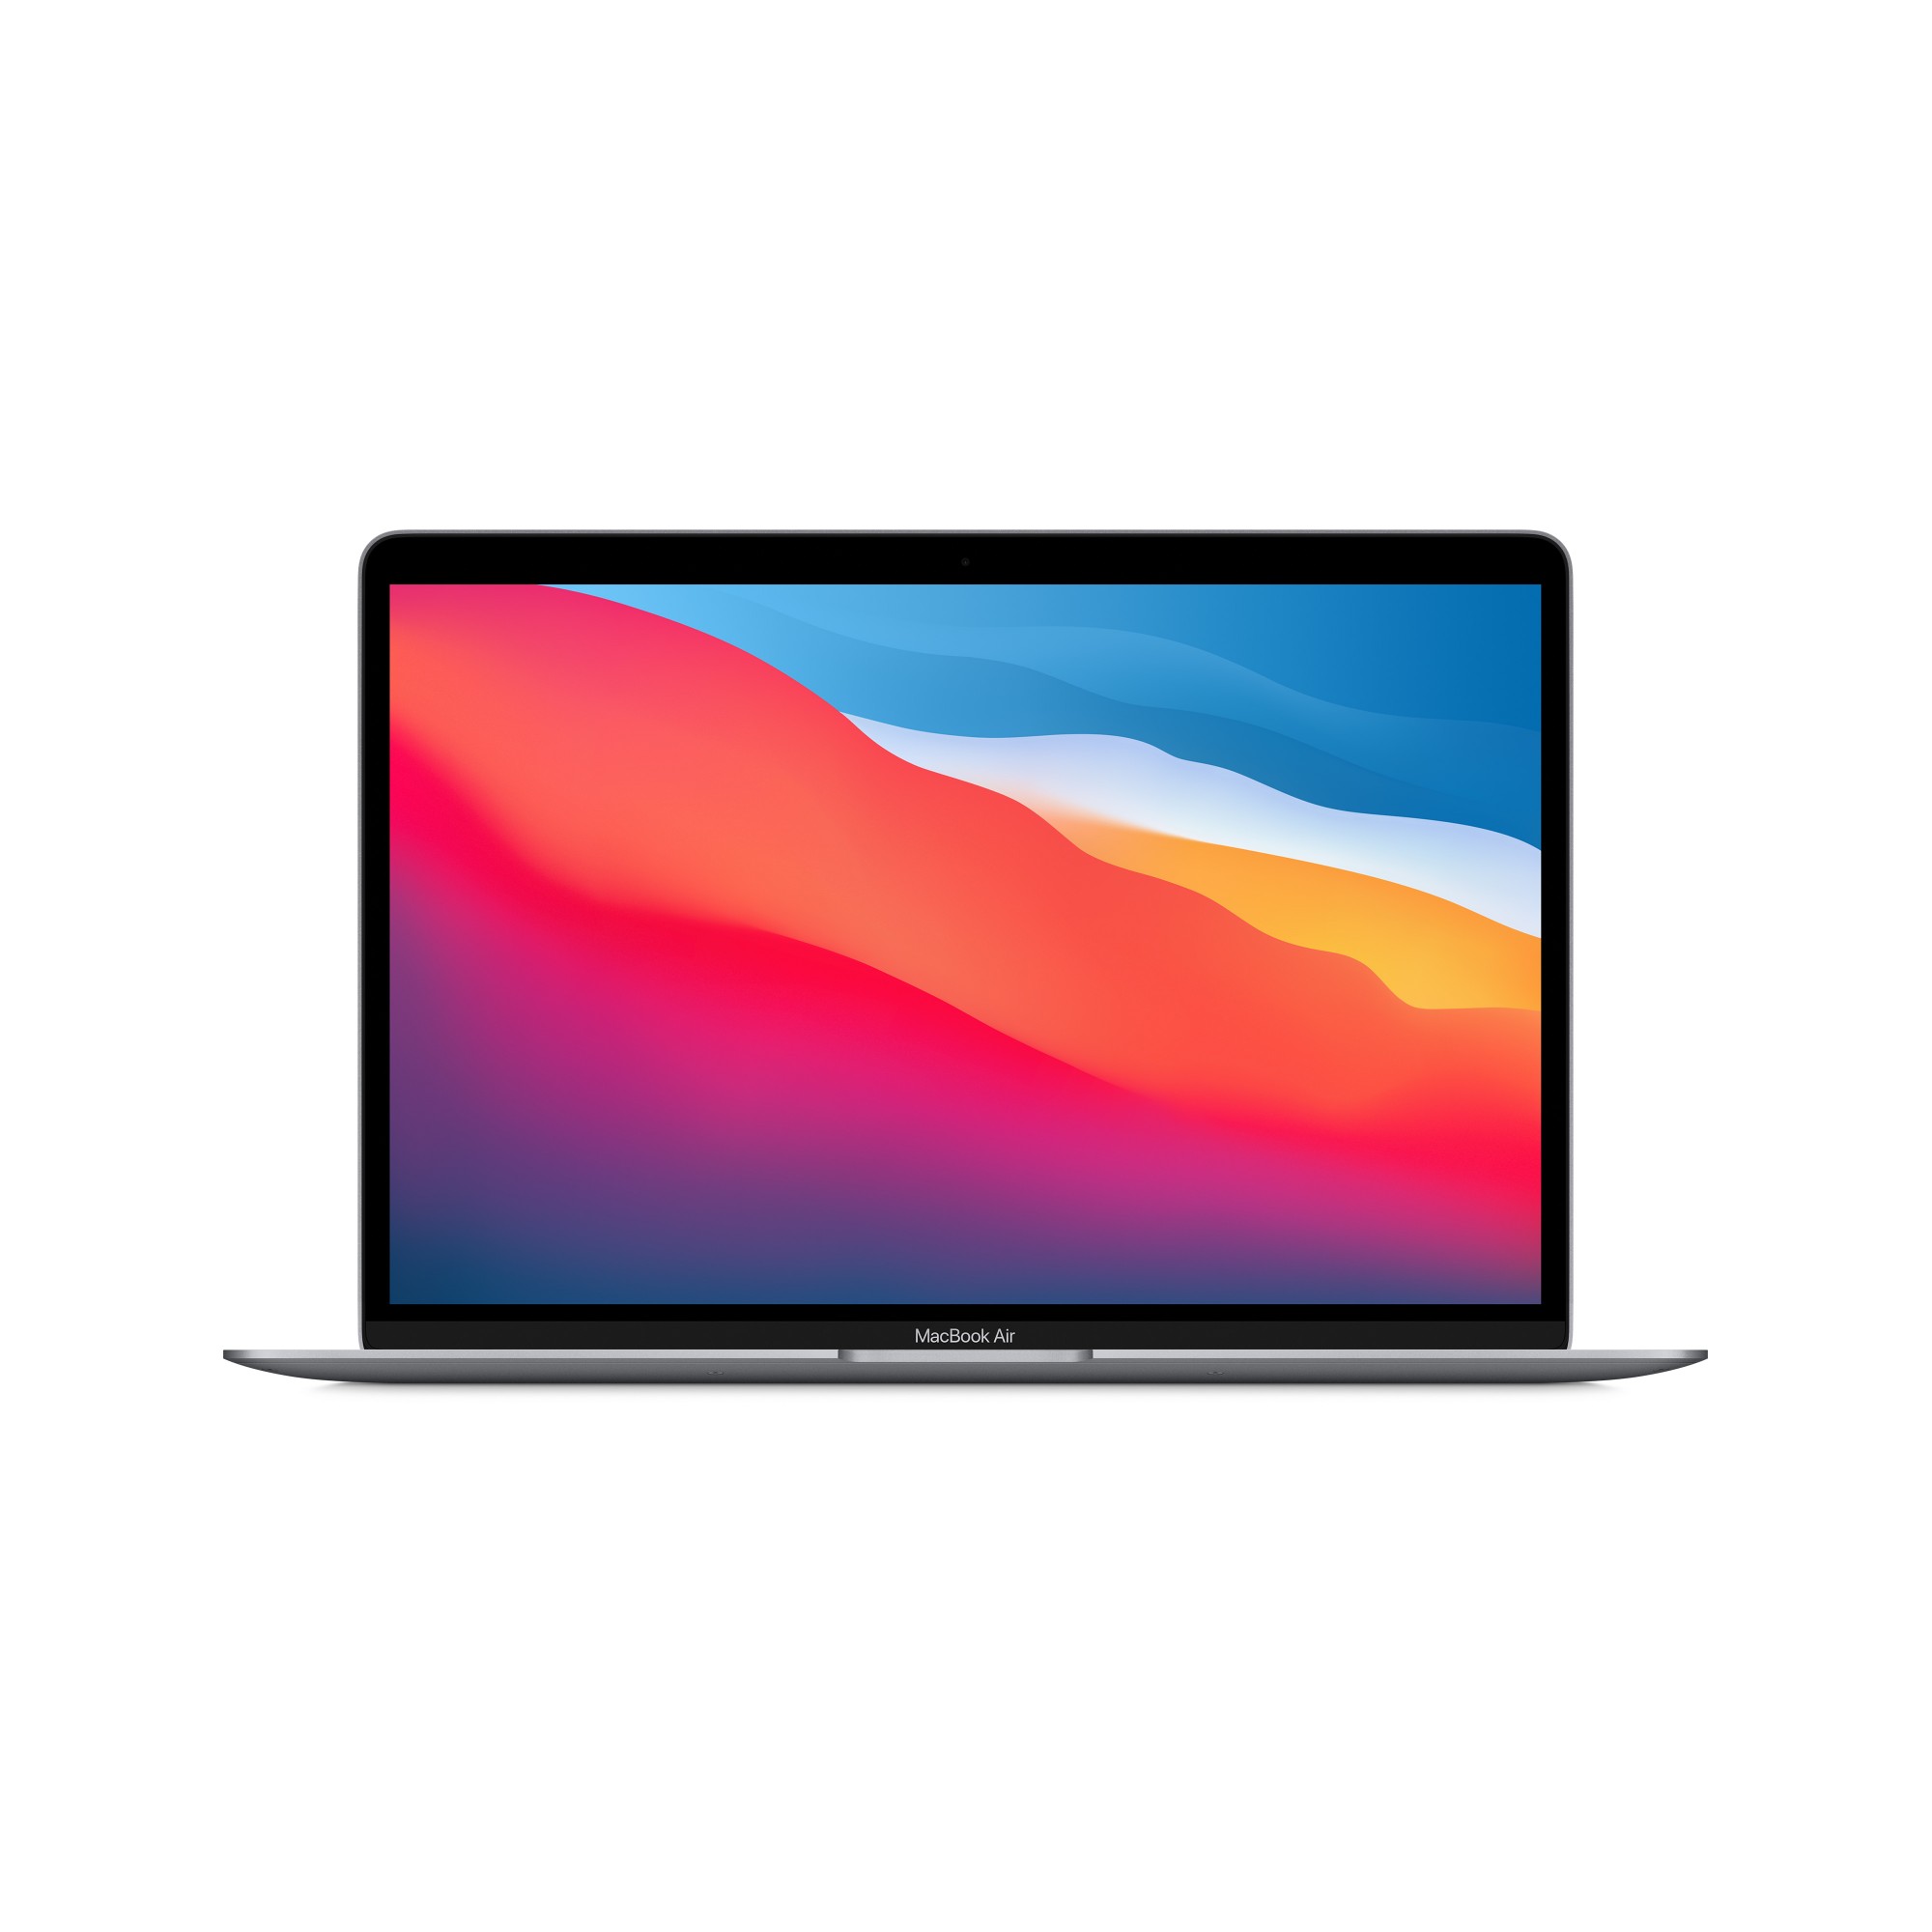 Apple MacBook Air 13-inch : M1 chip with 8-core CPU and 7-core GPU, 256GB - Space Grey (2020)